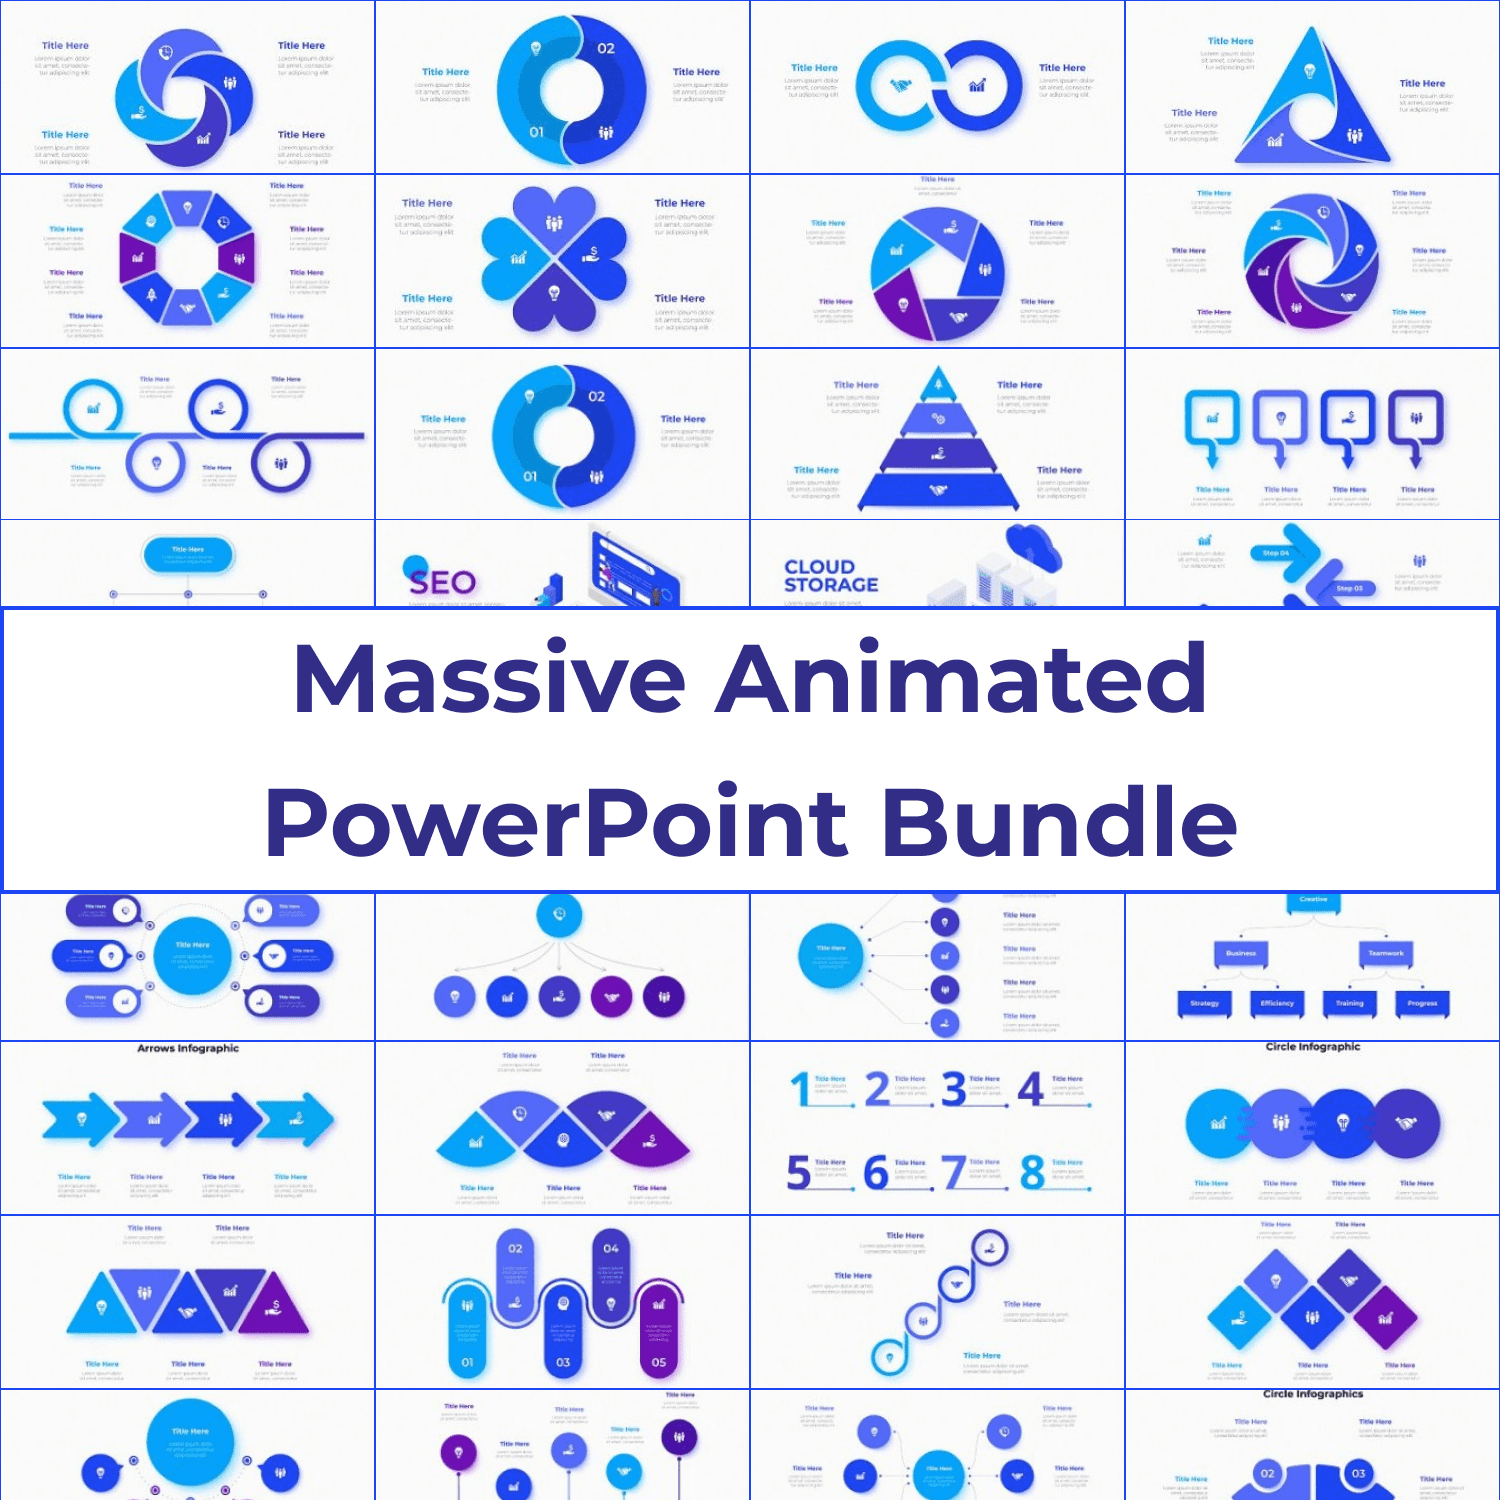 Massive Animated PowerPoint Bundle by MasterBundles.